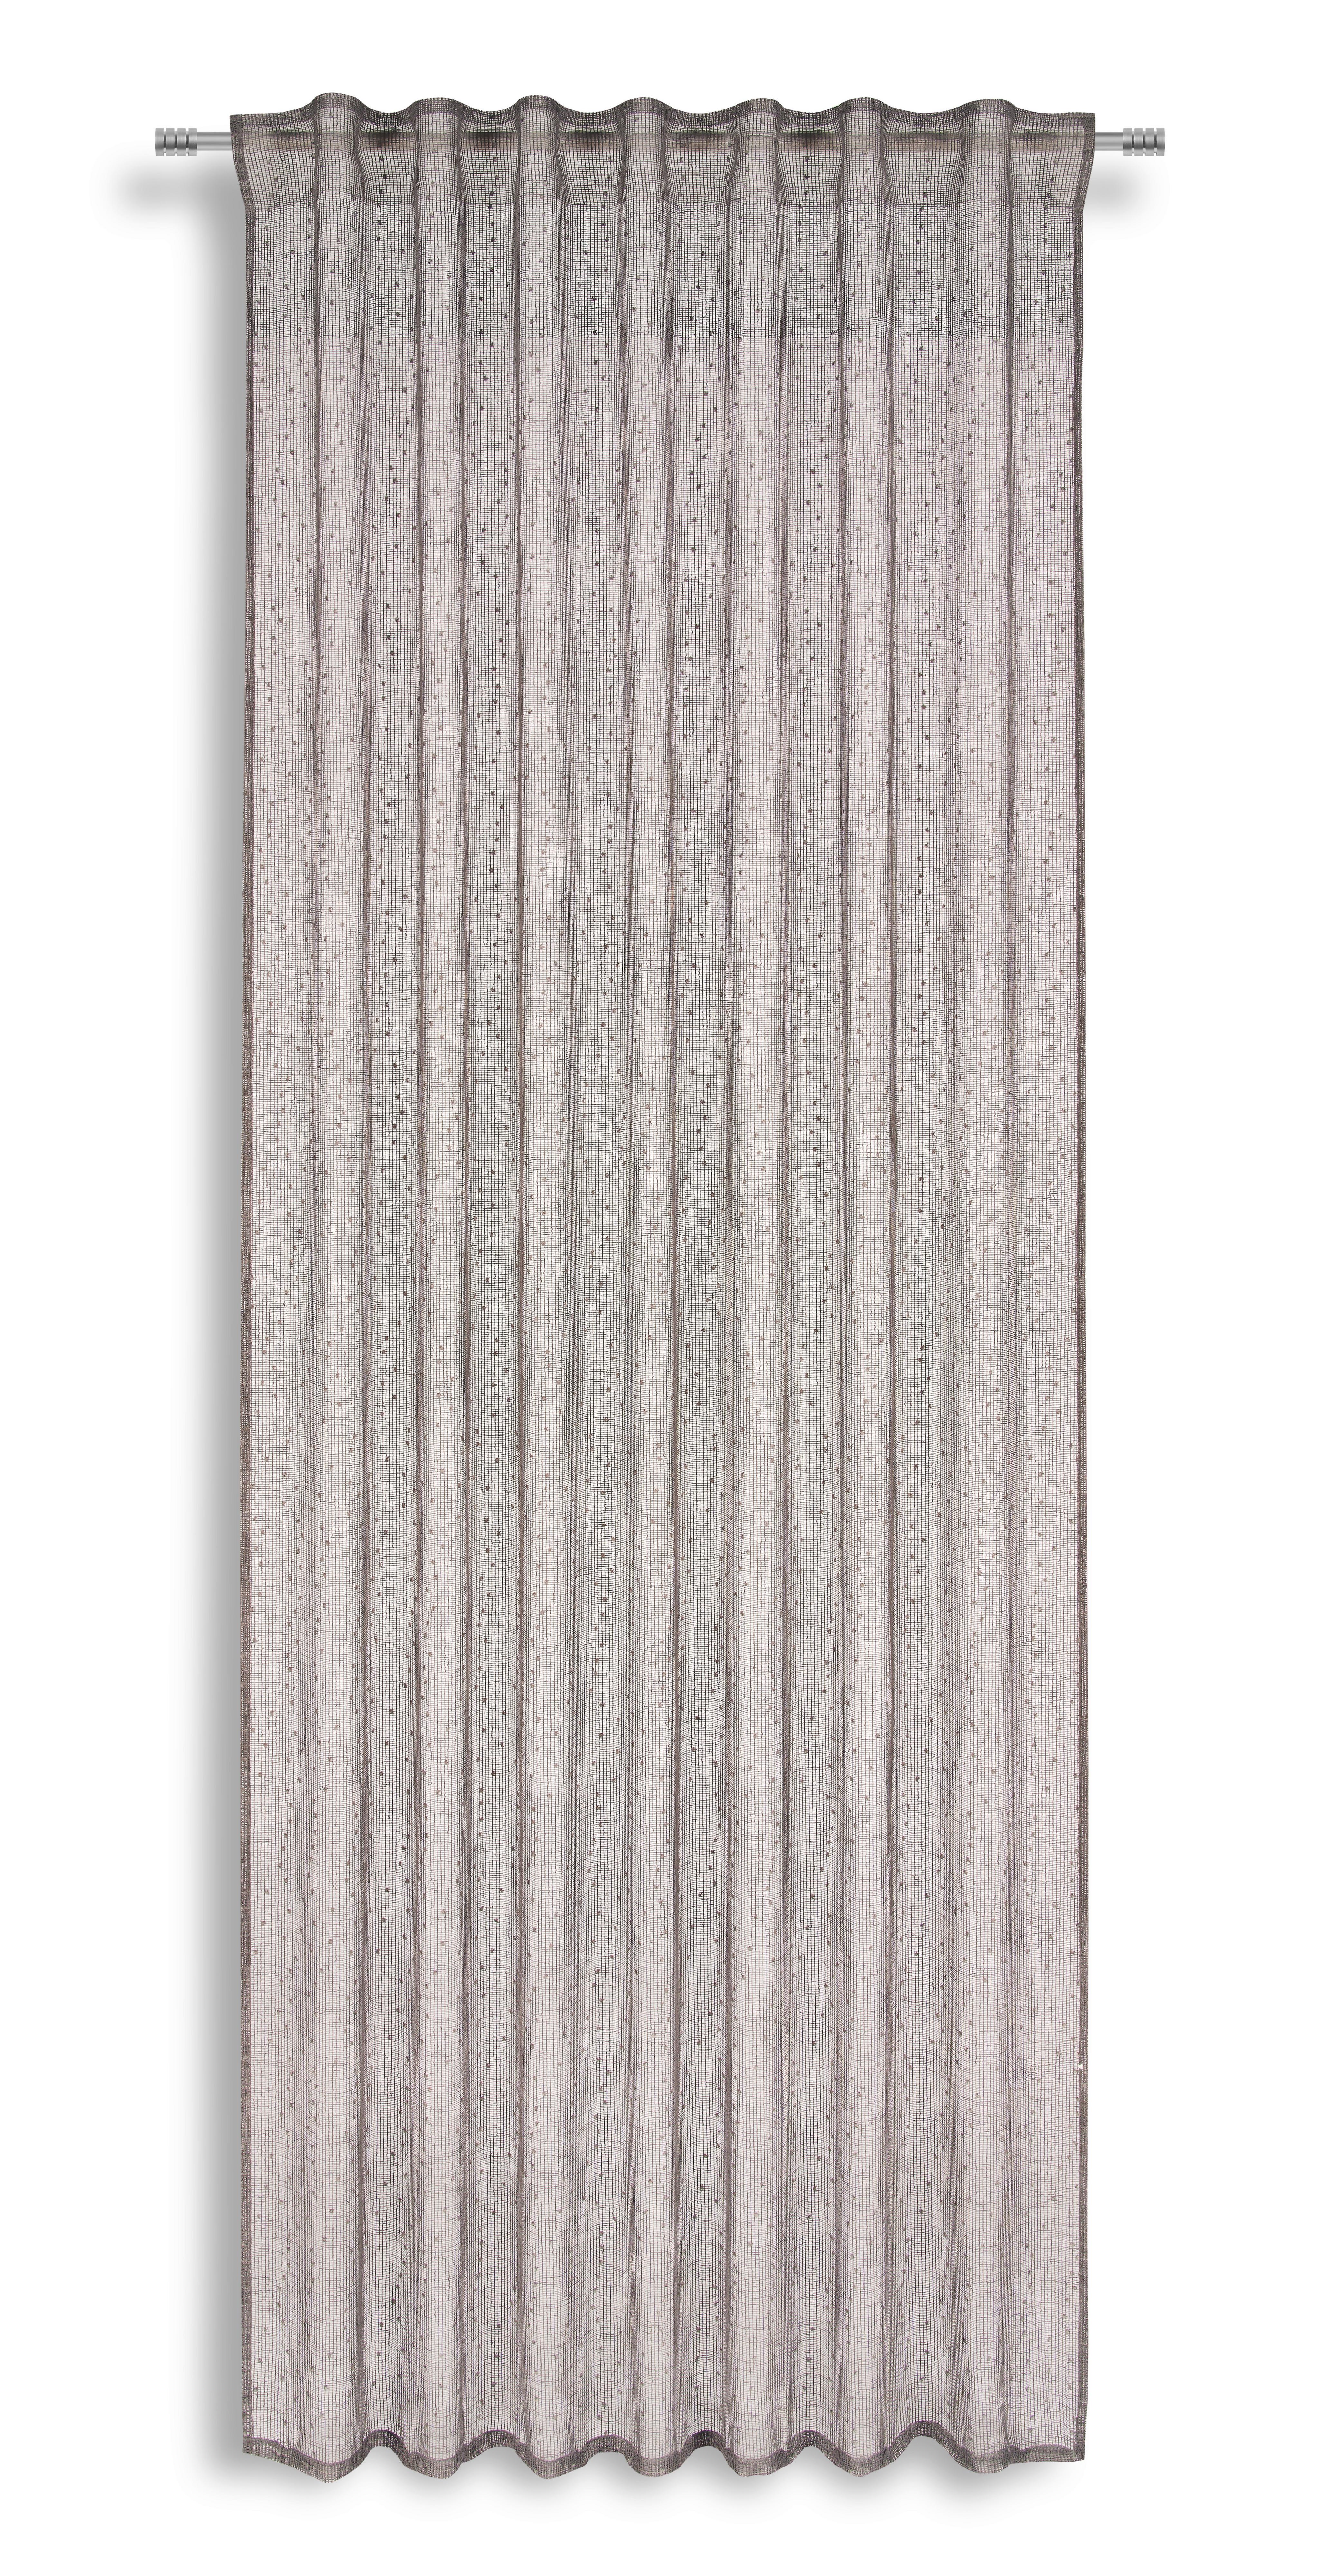 Készfüggöny Elisa - Taupe, modern, Textil (140/245cm) - Luca Bessoni